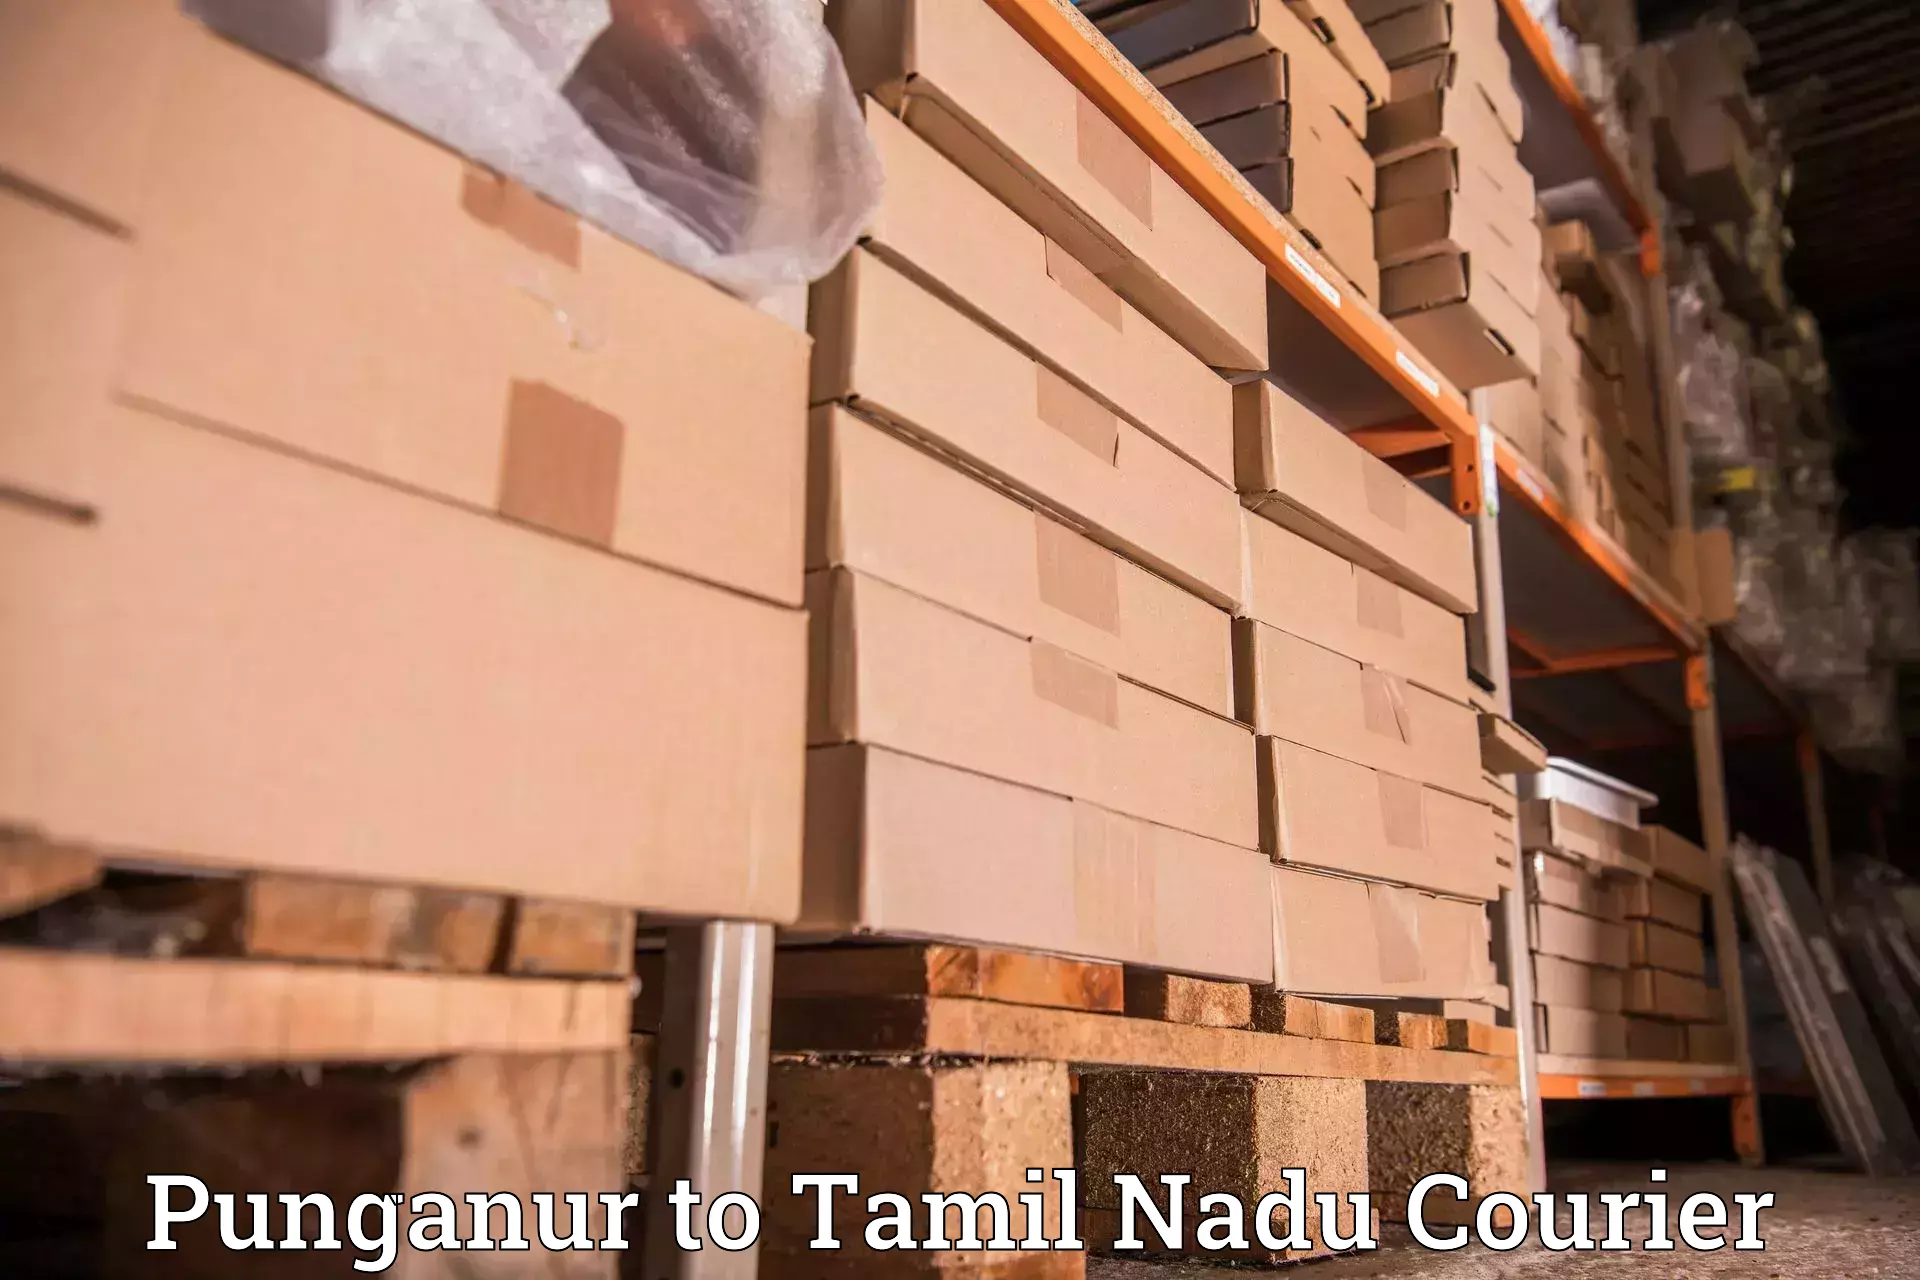 Urgent courier needs Punganur to Kalpakkam